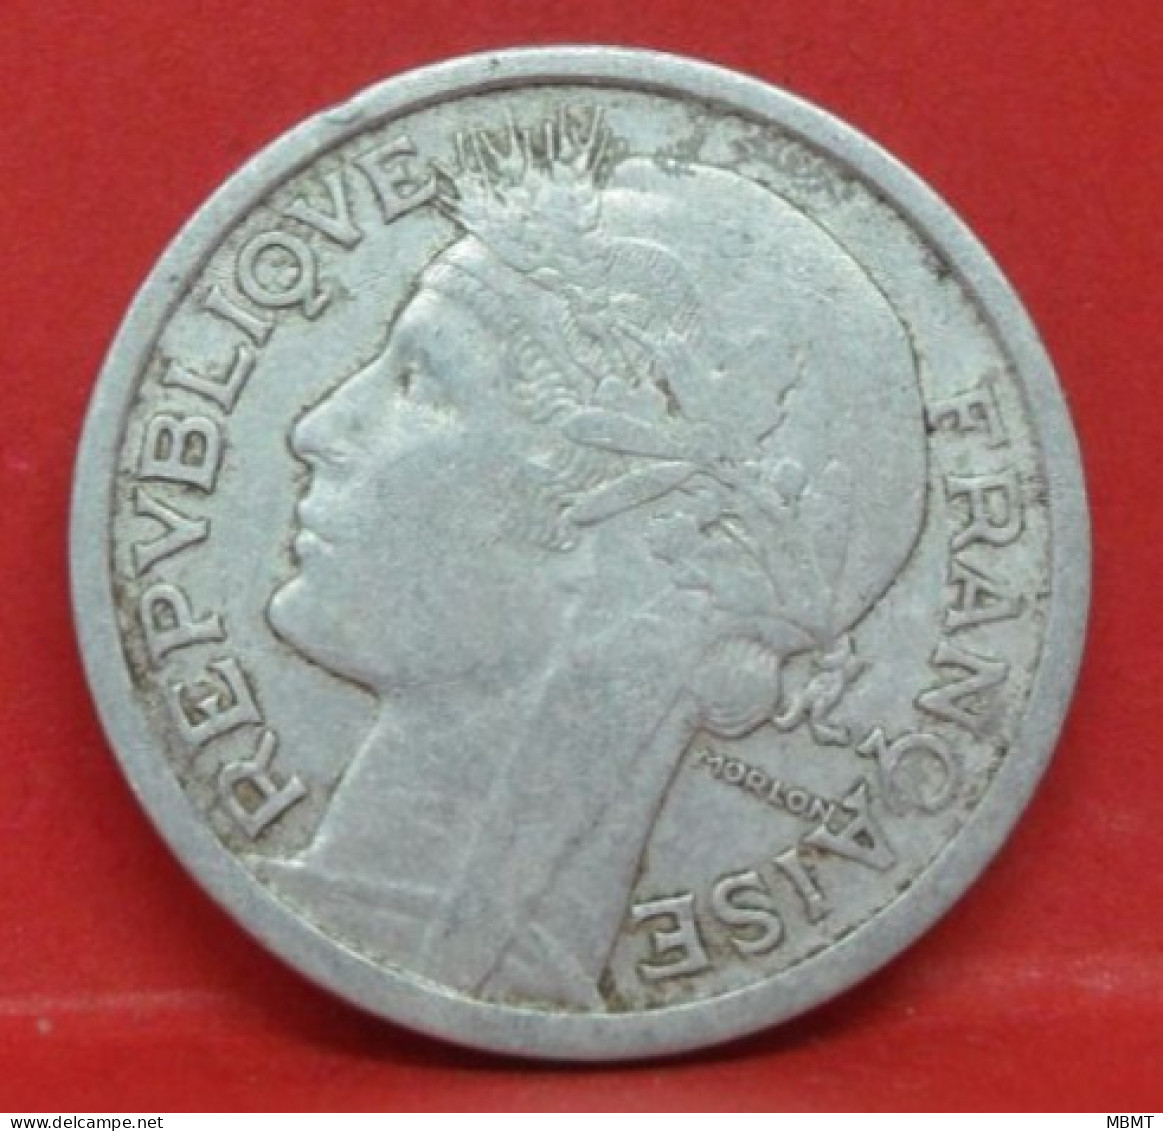 1 Franc Morlon Alu 1946 - TB - Pièce Monnaie France - Article N°668 - 1 Franc